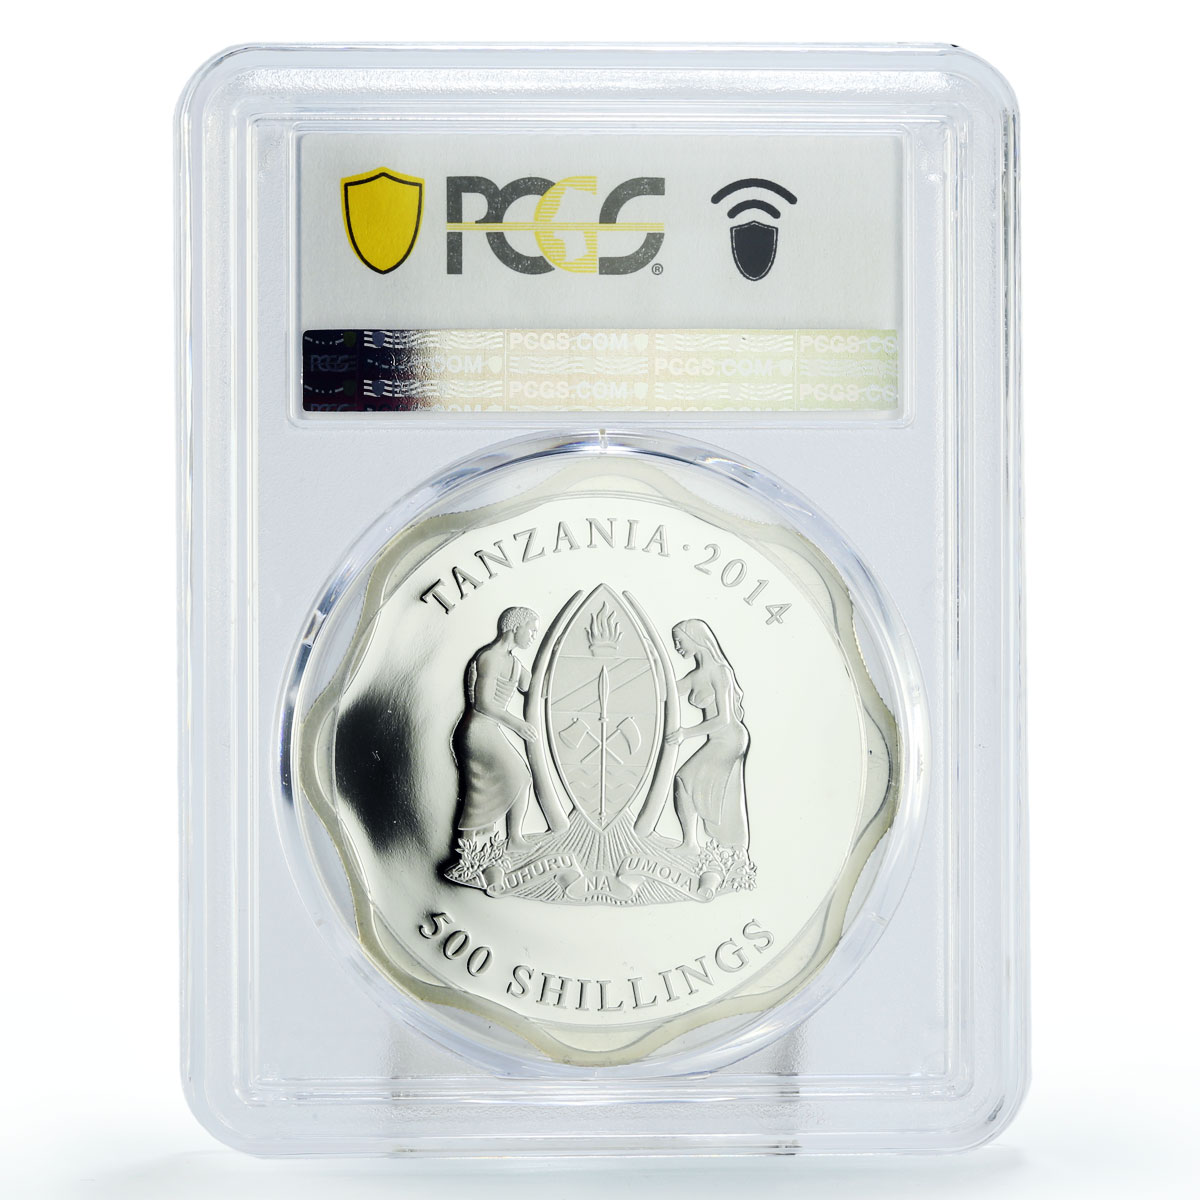 Tanzania 500 shillings Singapore Botanic Gardens PR69 PCGS silver coin 2014